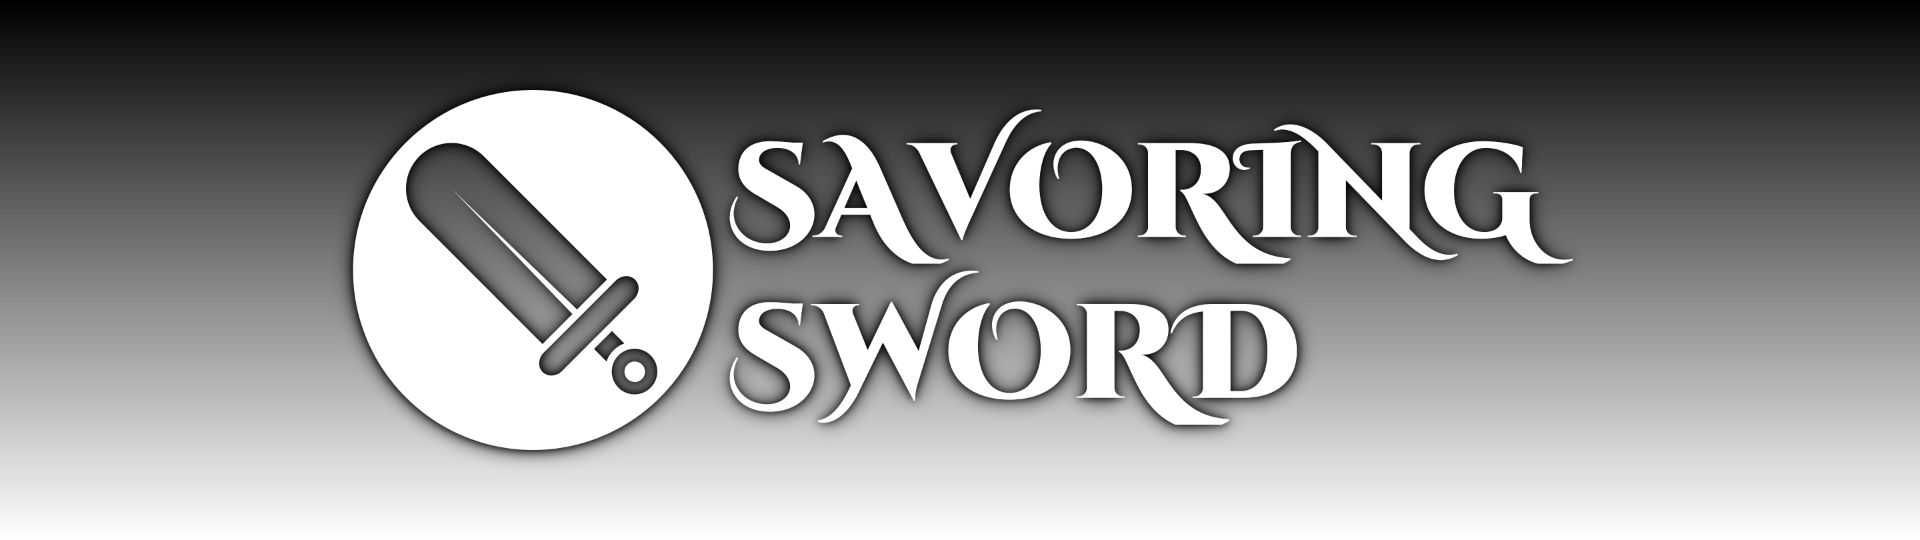 Savoring Sword